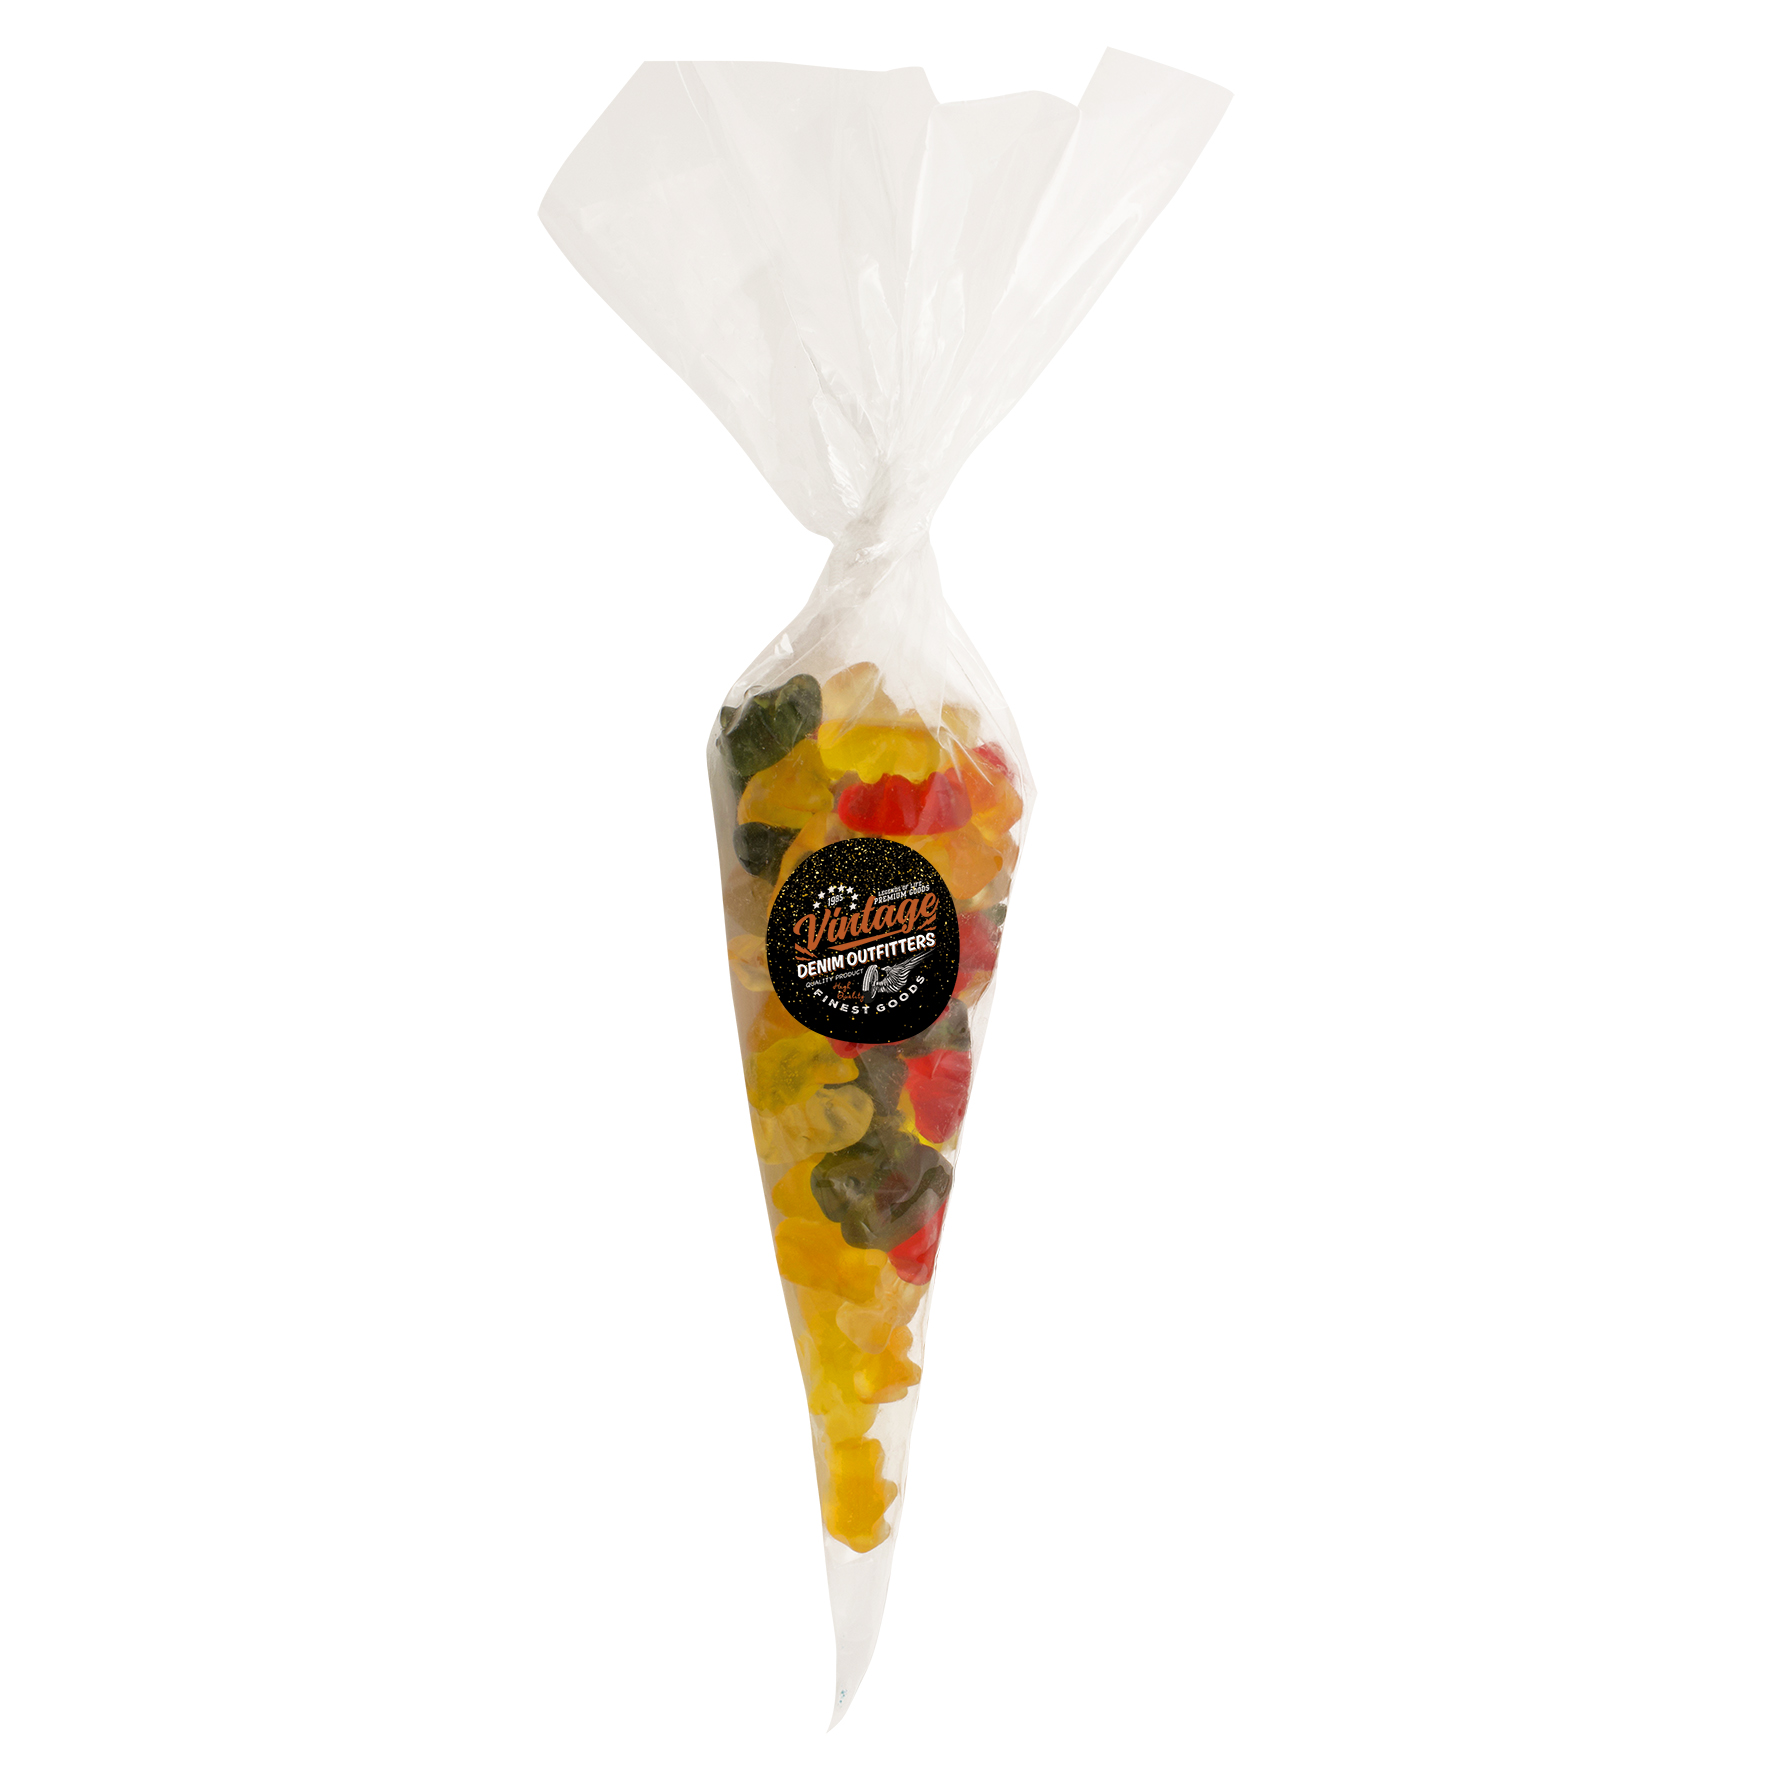 c 0605gb 00 09 - Sweet cones with gummy bears (220g)